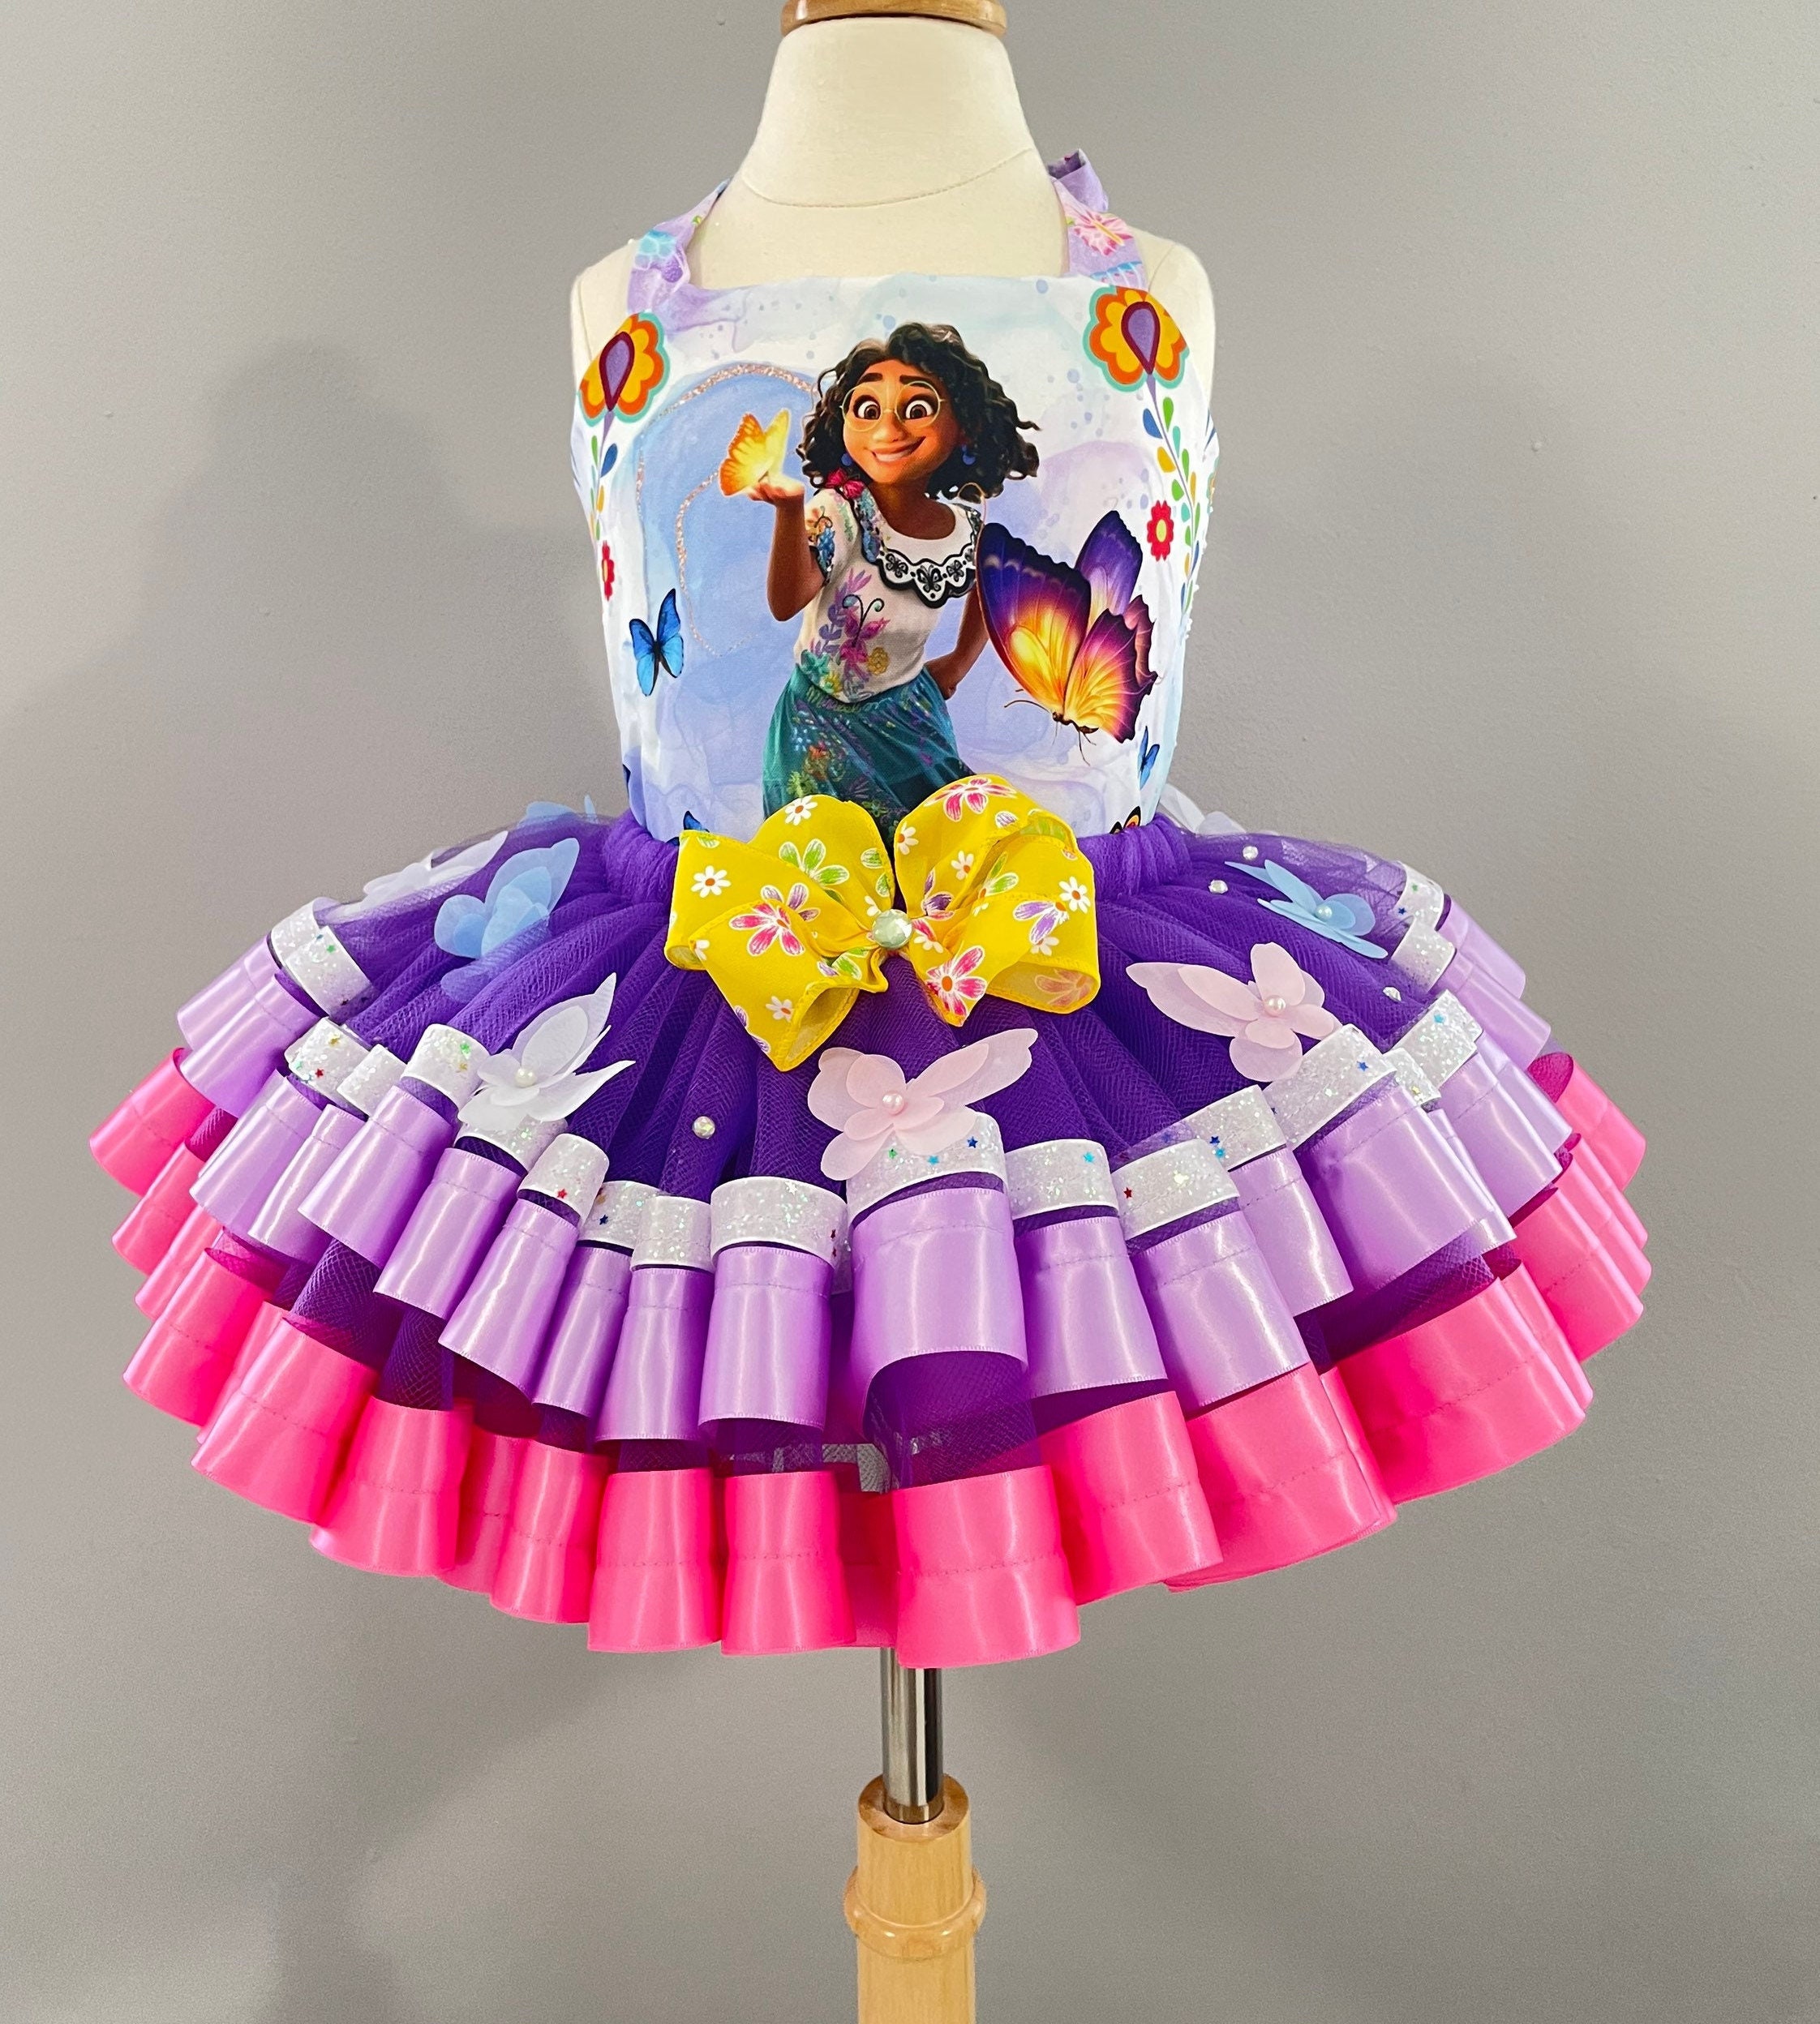 Costume Mirabel Encanto Opp per Bambina